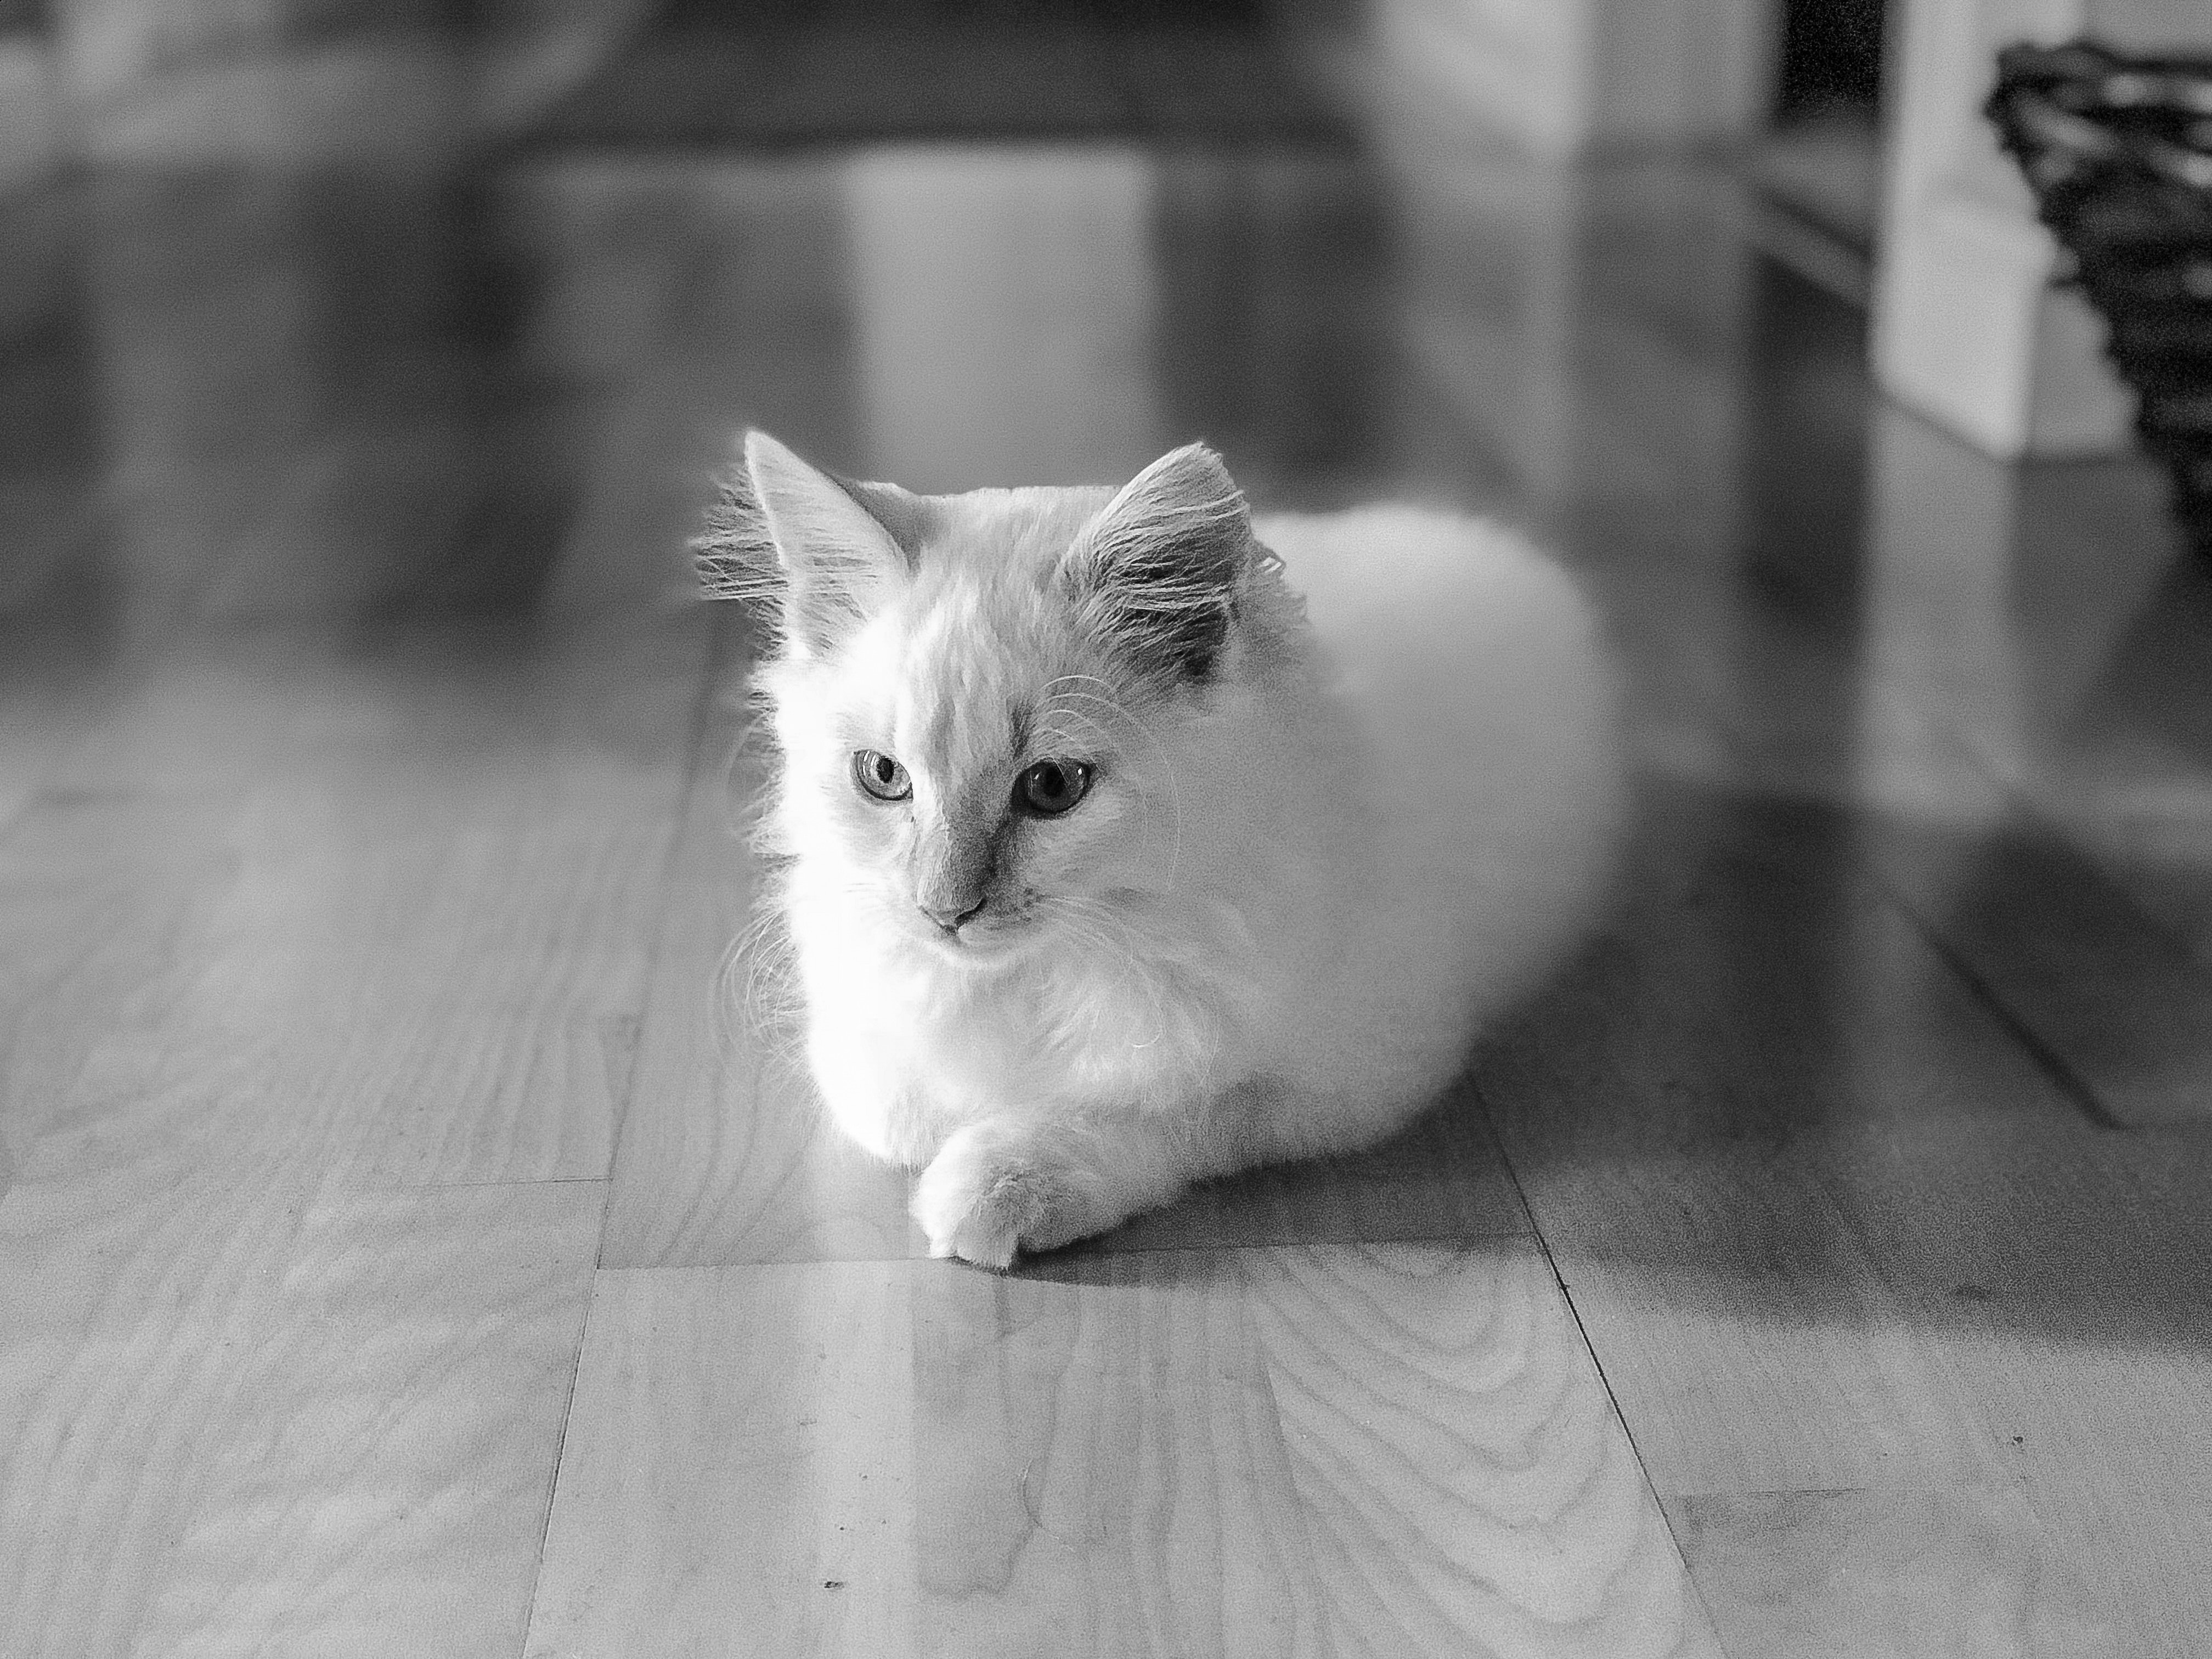 Silhouette photo of cat sitting on floor